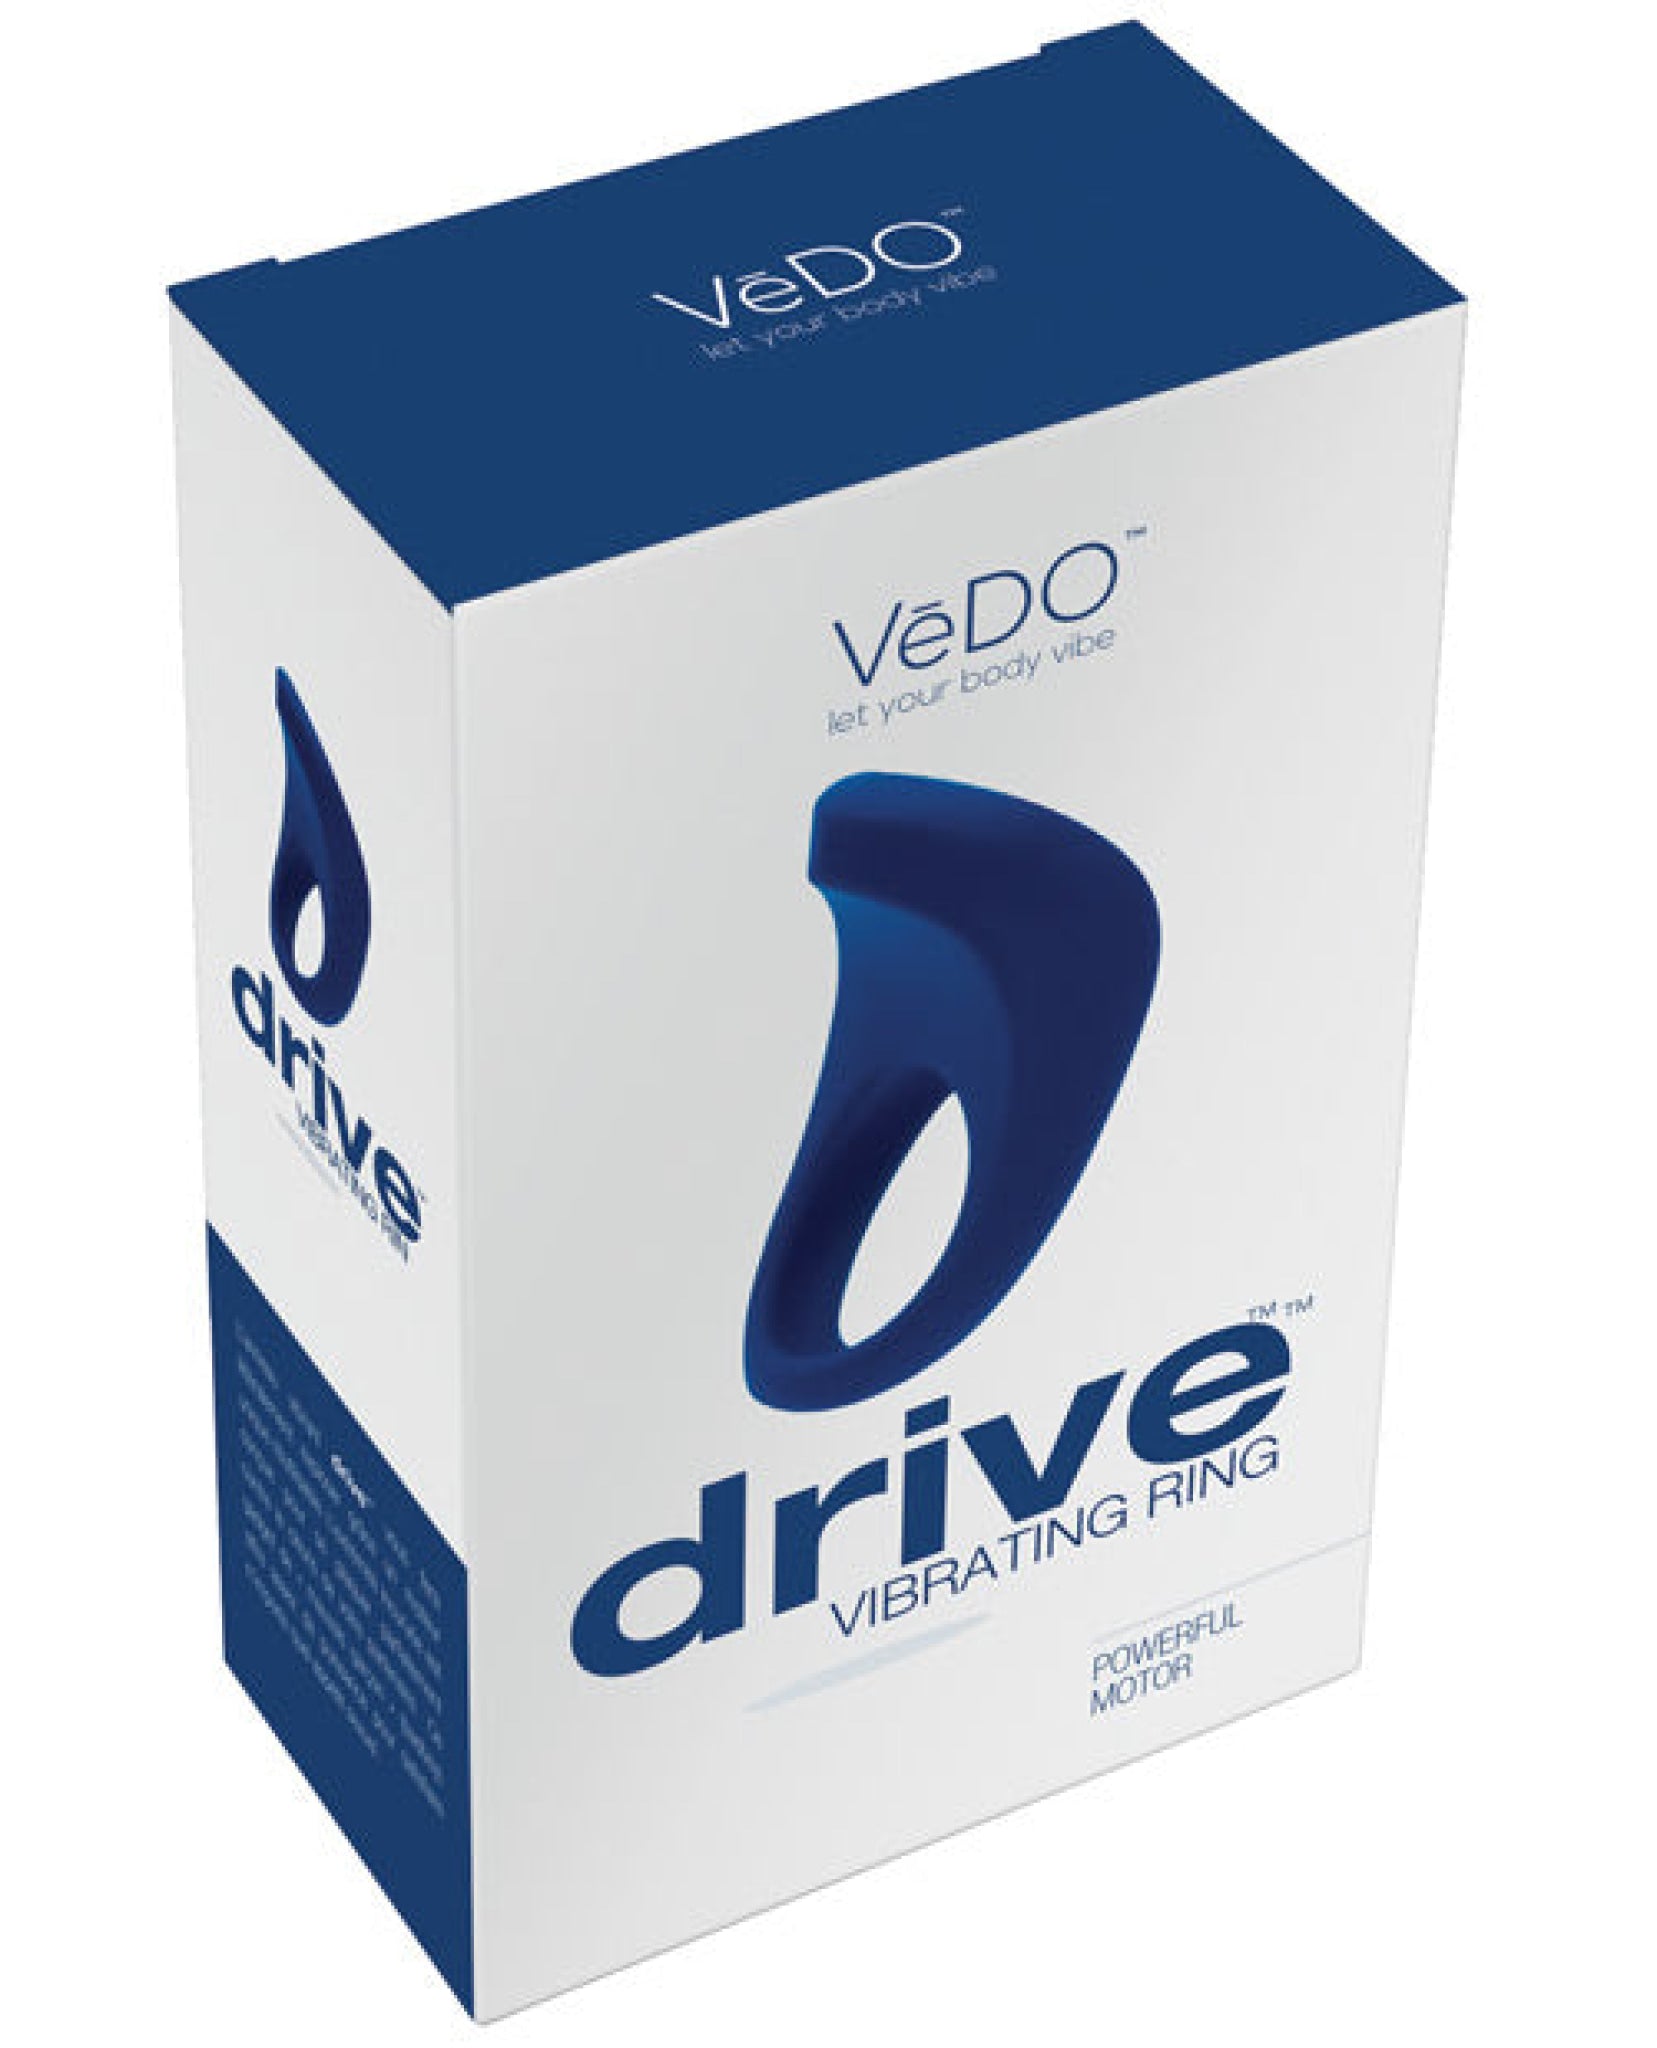 Vedo Drive Vibrating Ring VēDO